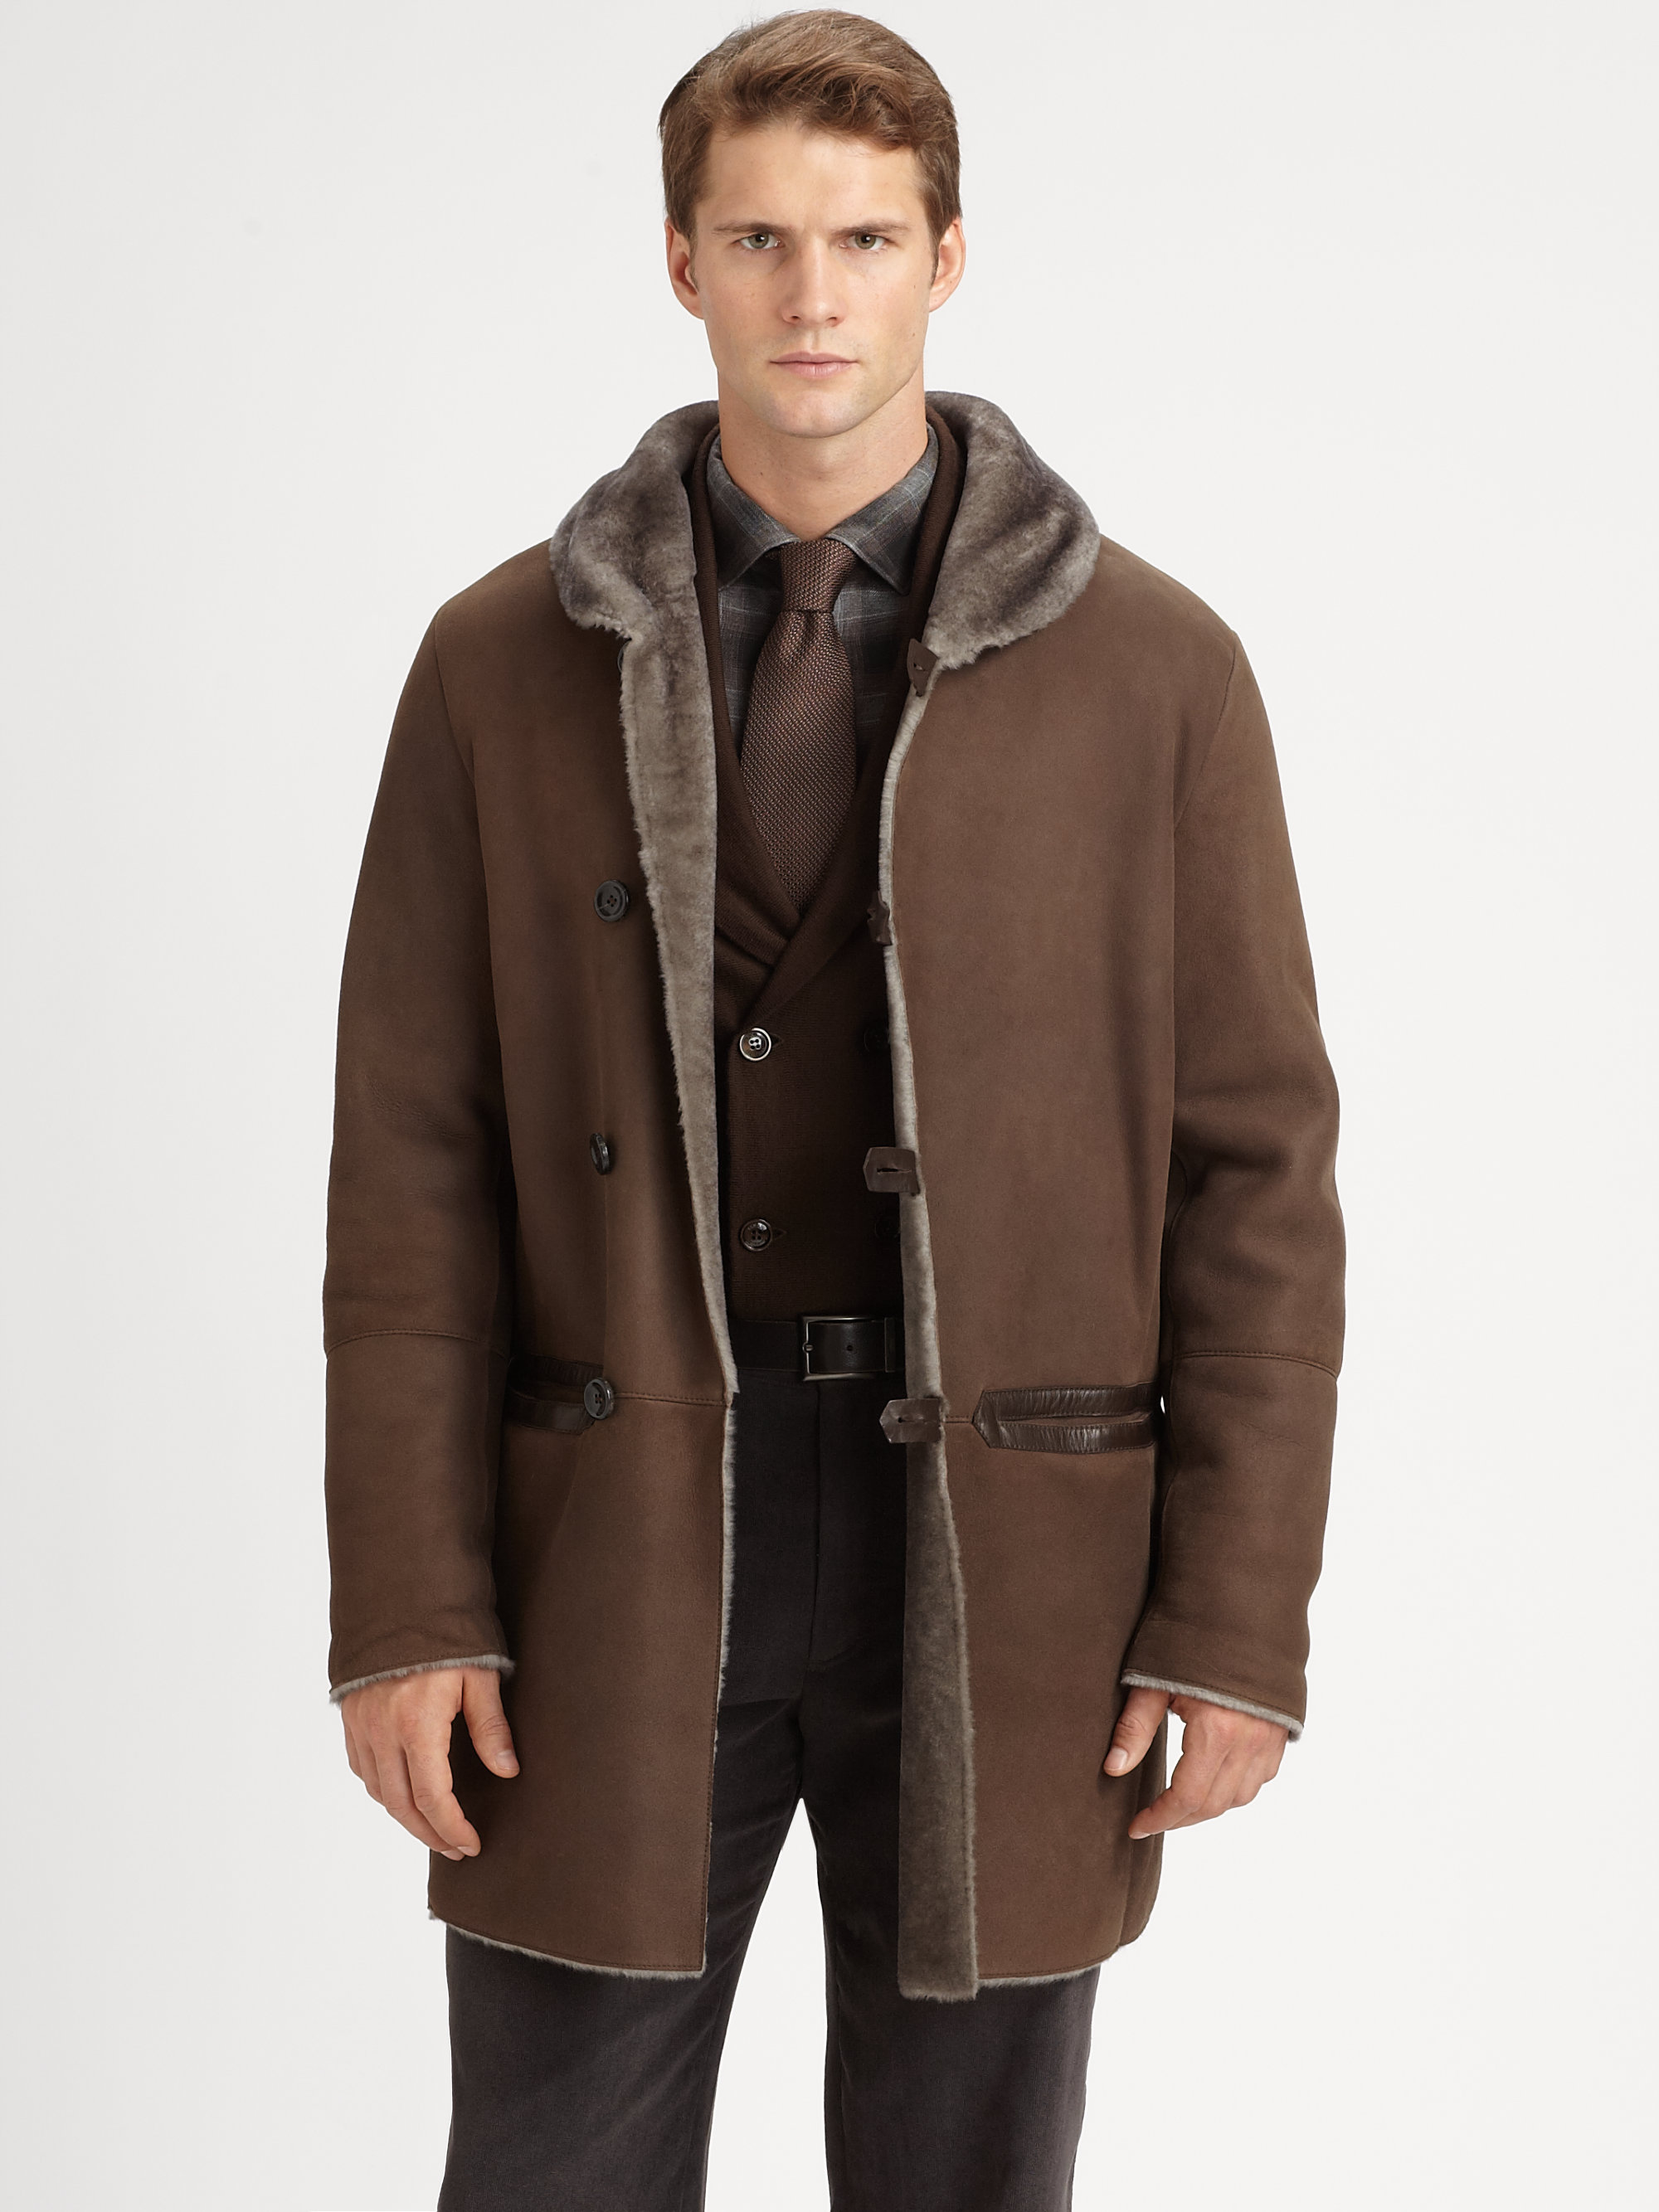 Lyst - Armani Long Shearling Coat in Brown for Men